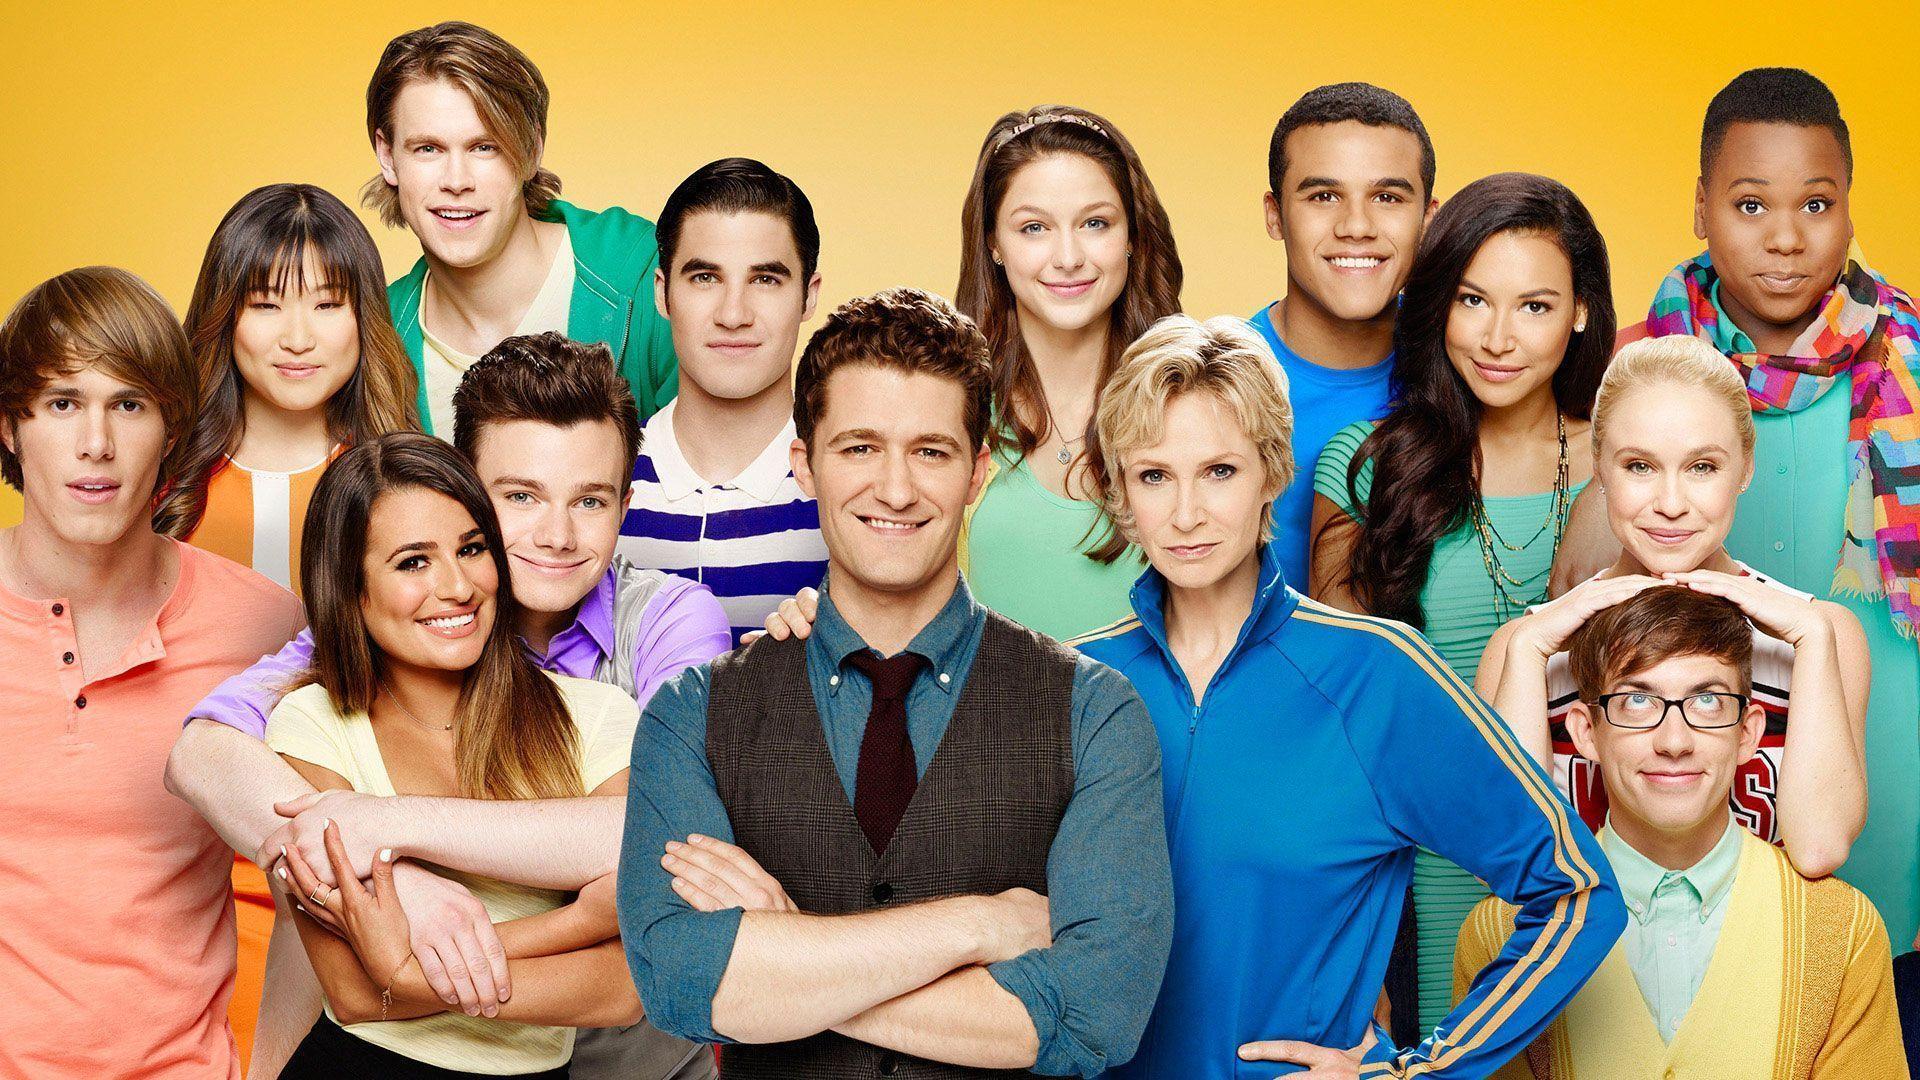 Glee Season 5 Cast Wallpaper Wide or HD. TV Series Wallpaper